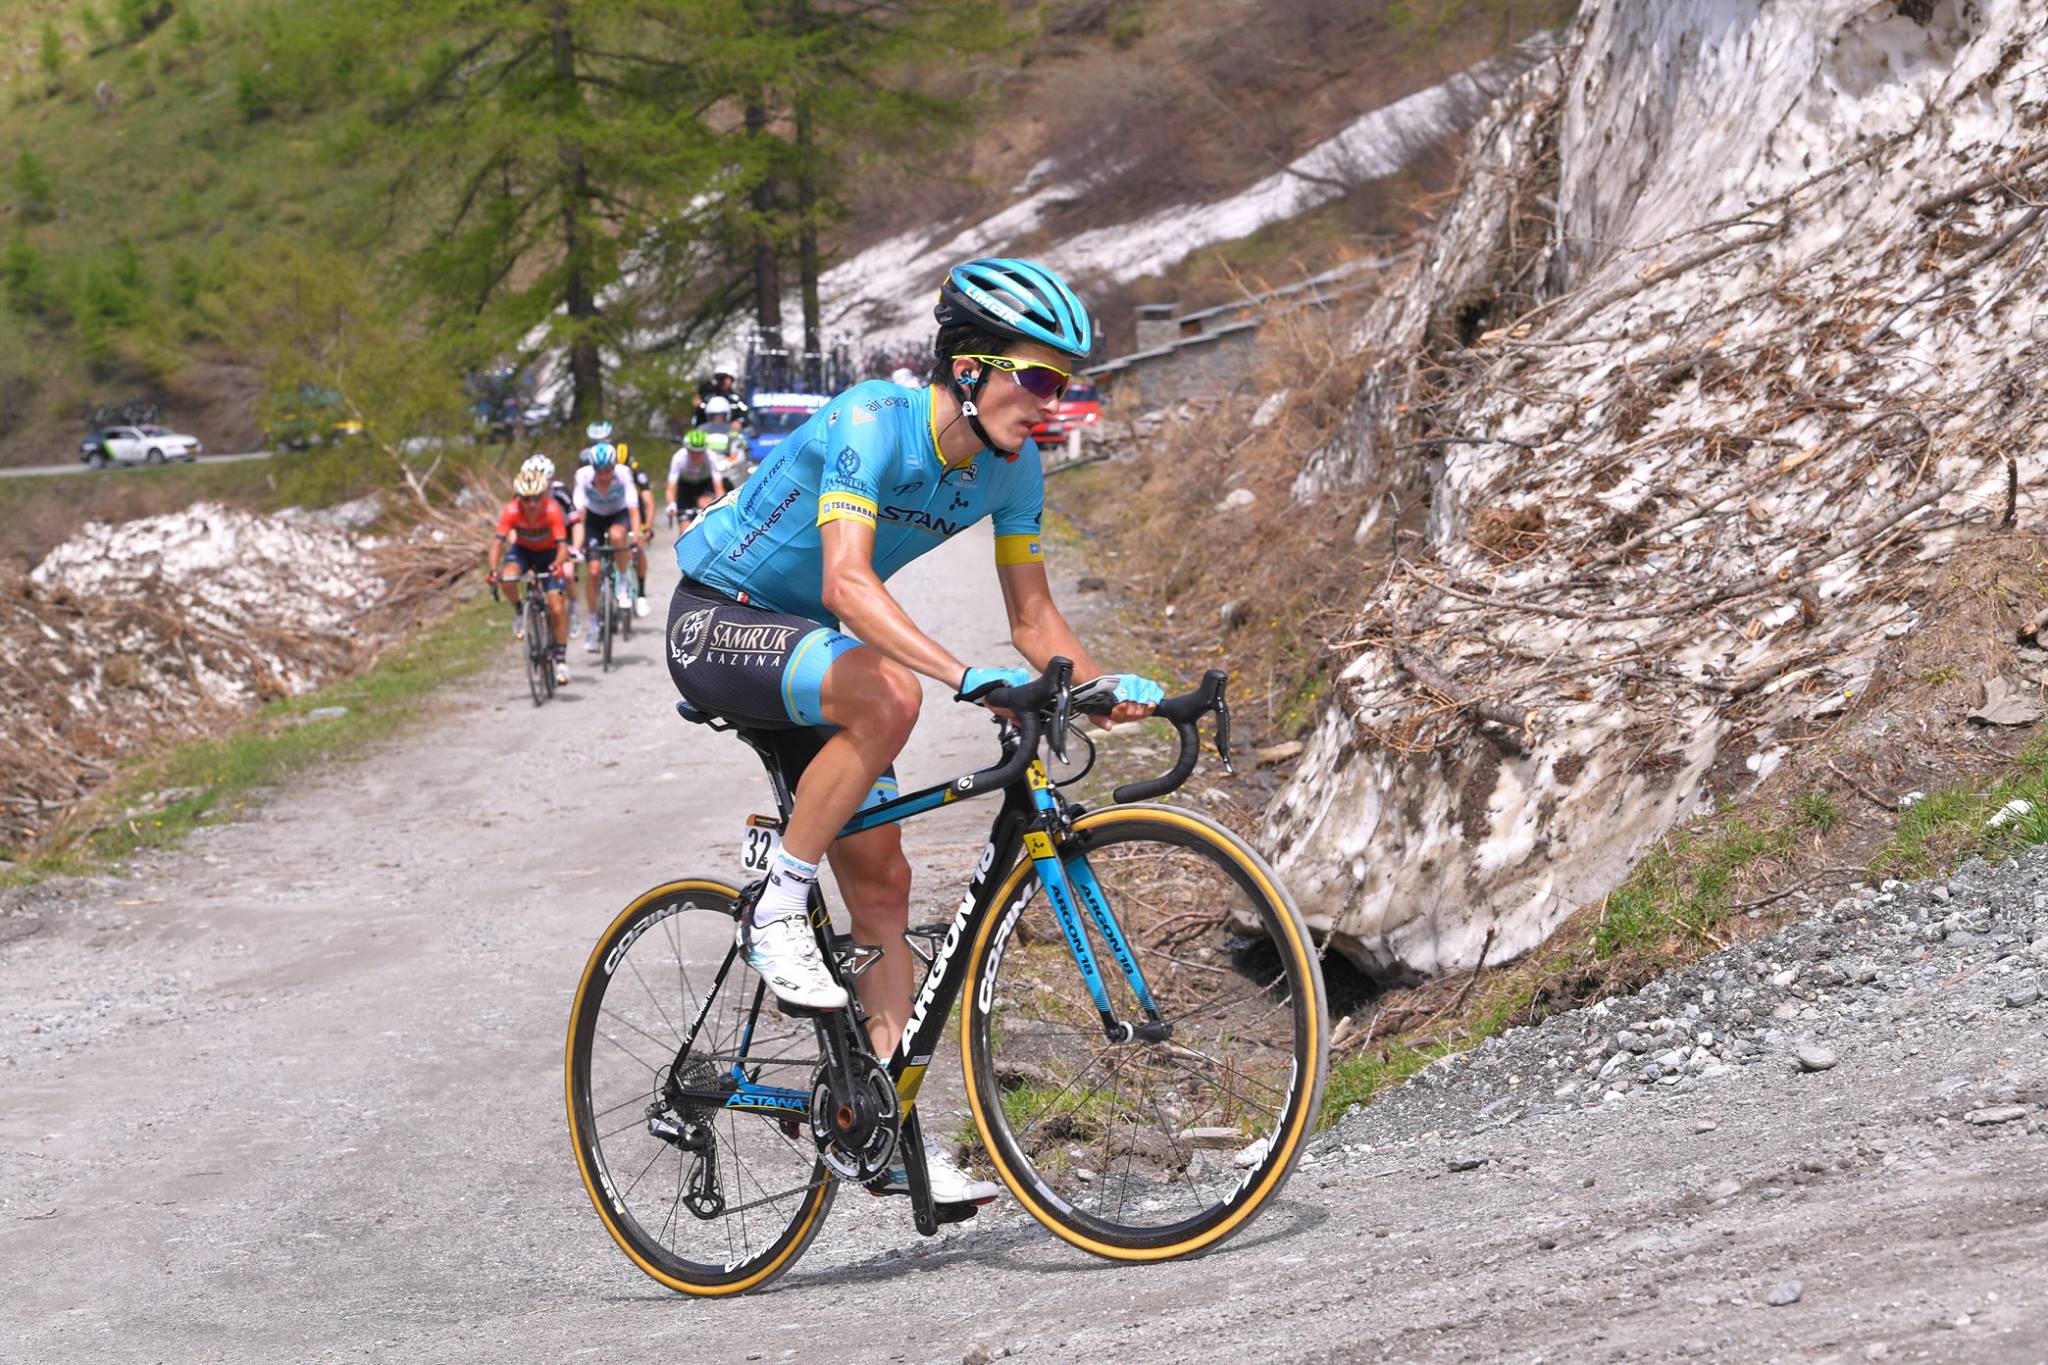 Giro de Italia - Pello Bilbao JoanSeguidor